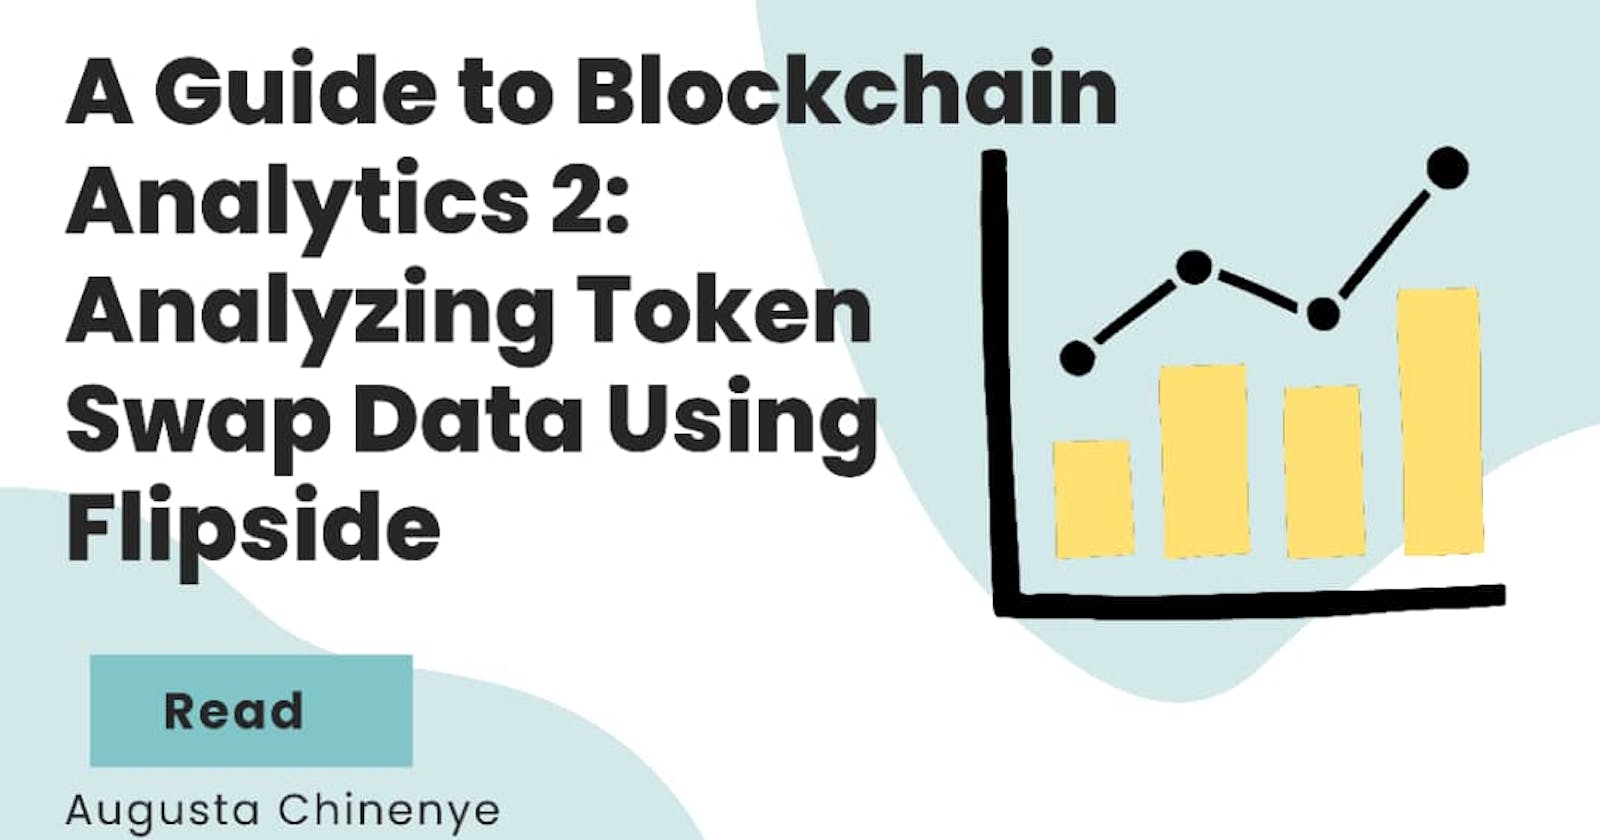 A Guide to Blockchain Analytics 2: Analyzing Token Swap data using Flipside